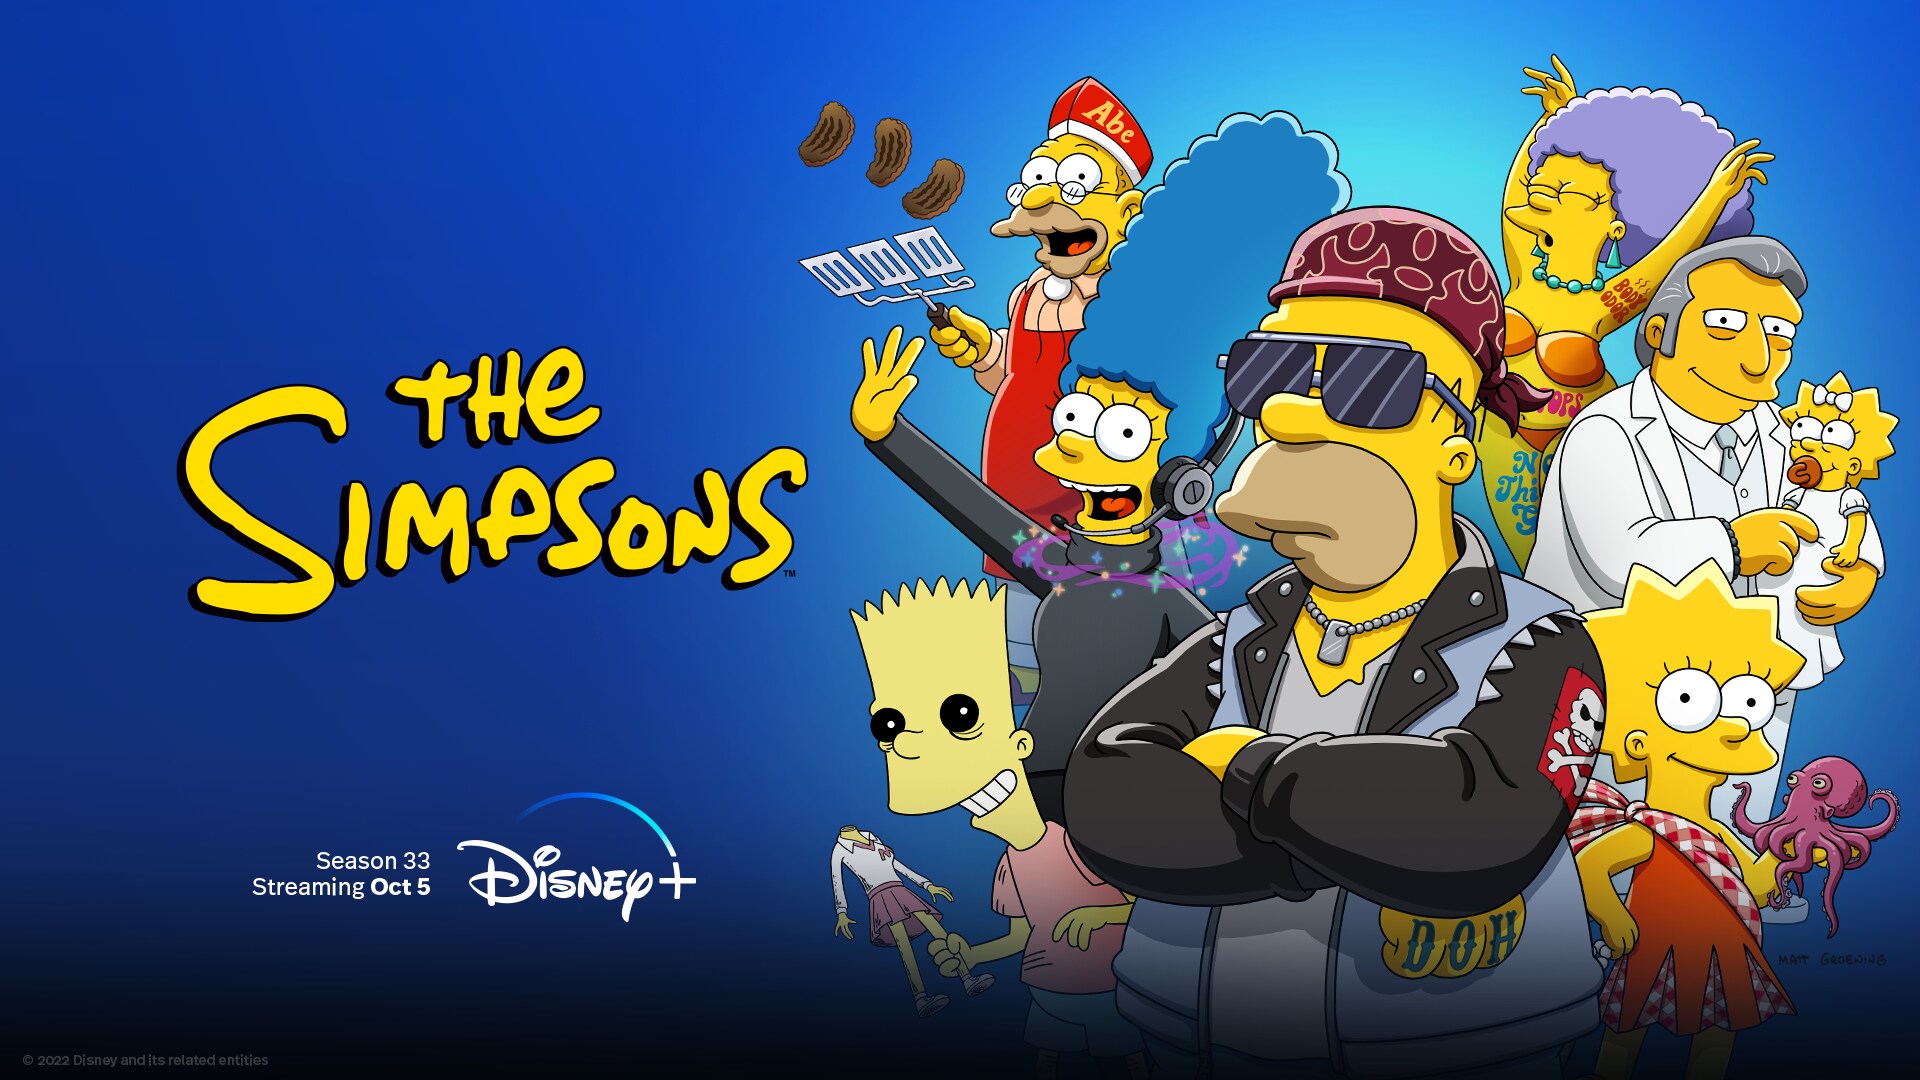 We Ll Be At Moe S The Simpsons Season 33 Streams October 5 On Disney Dmed Media